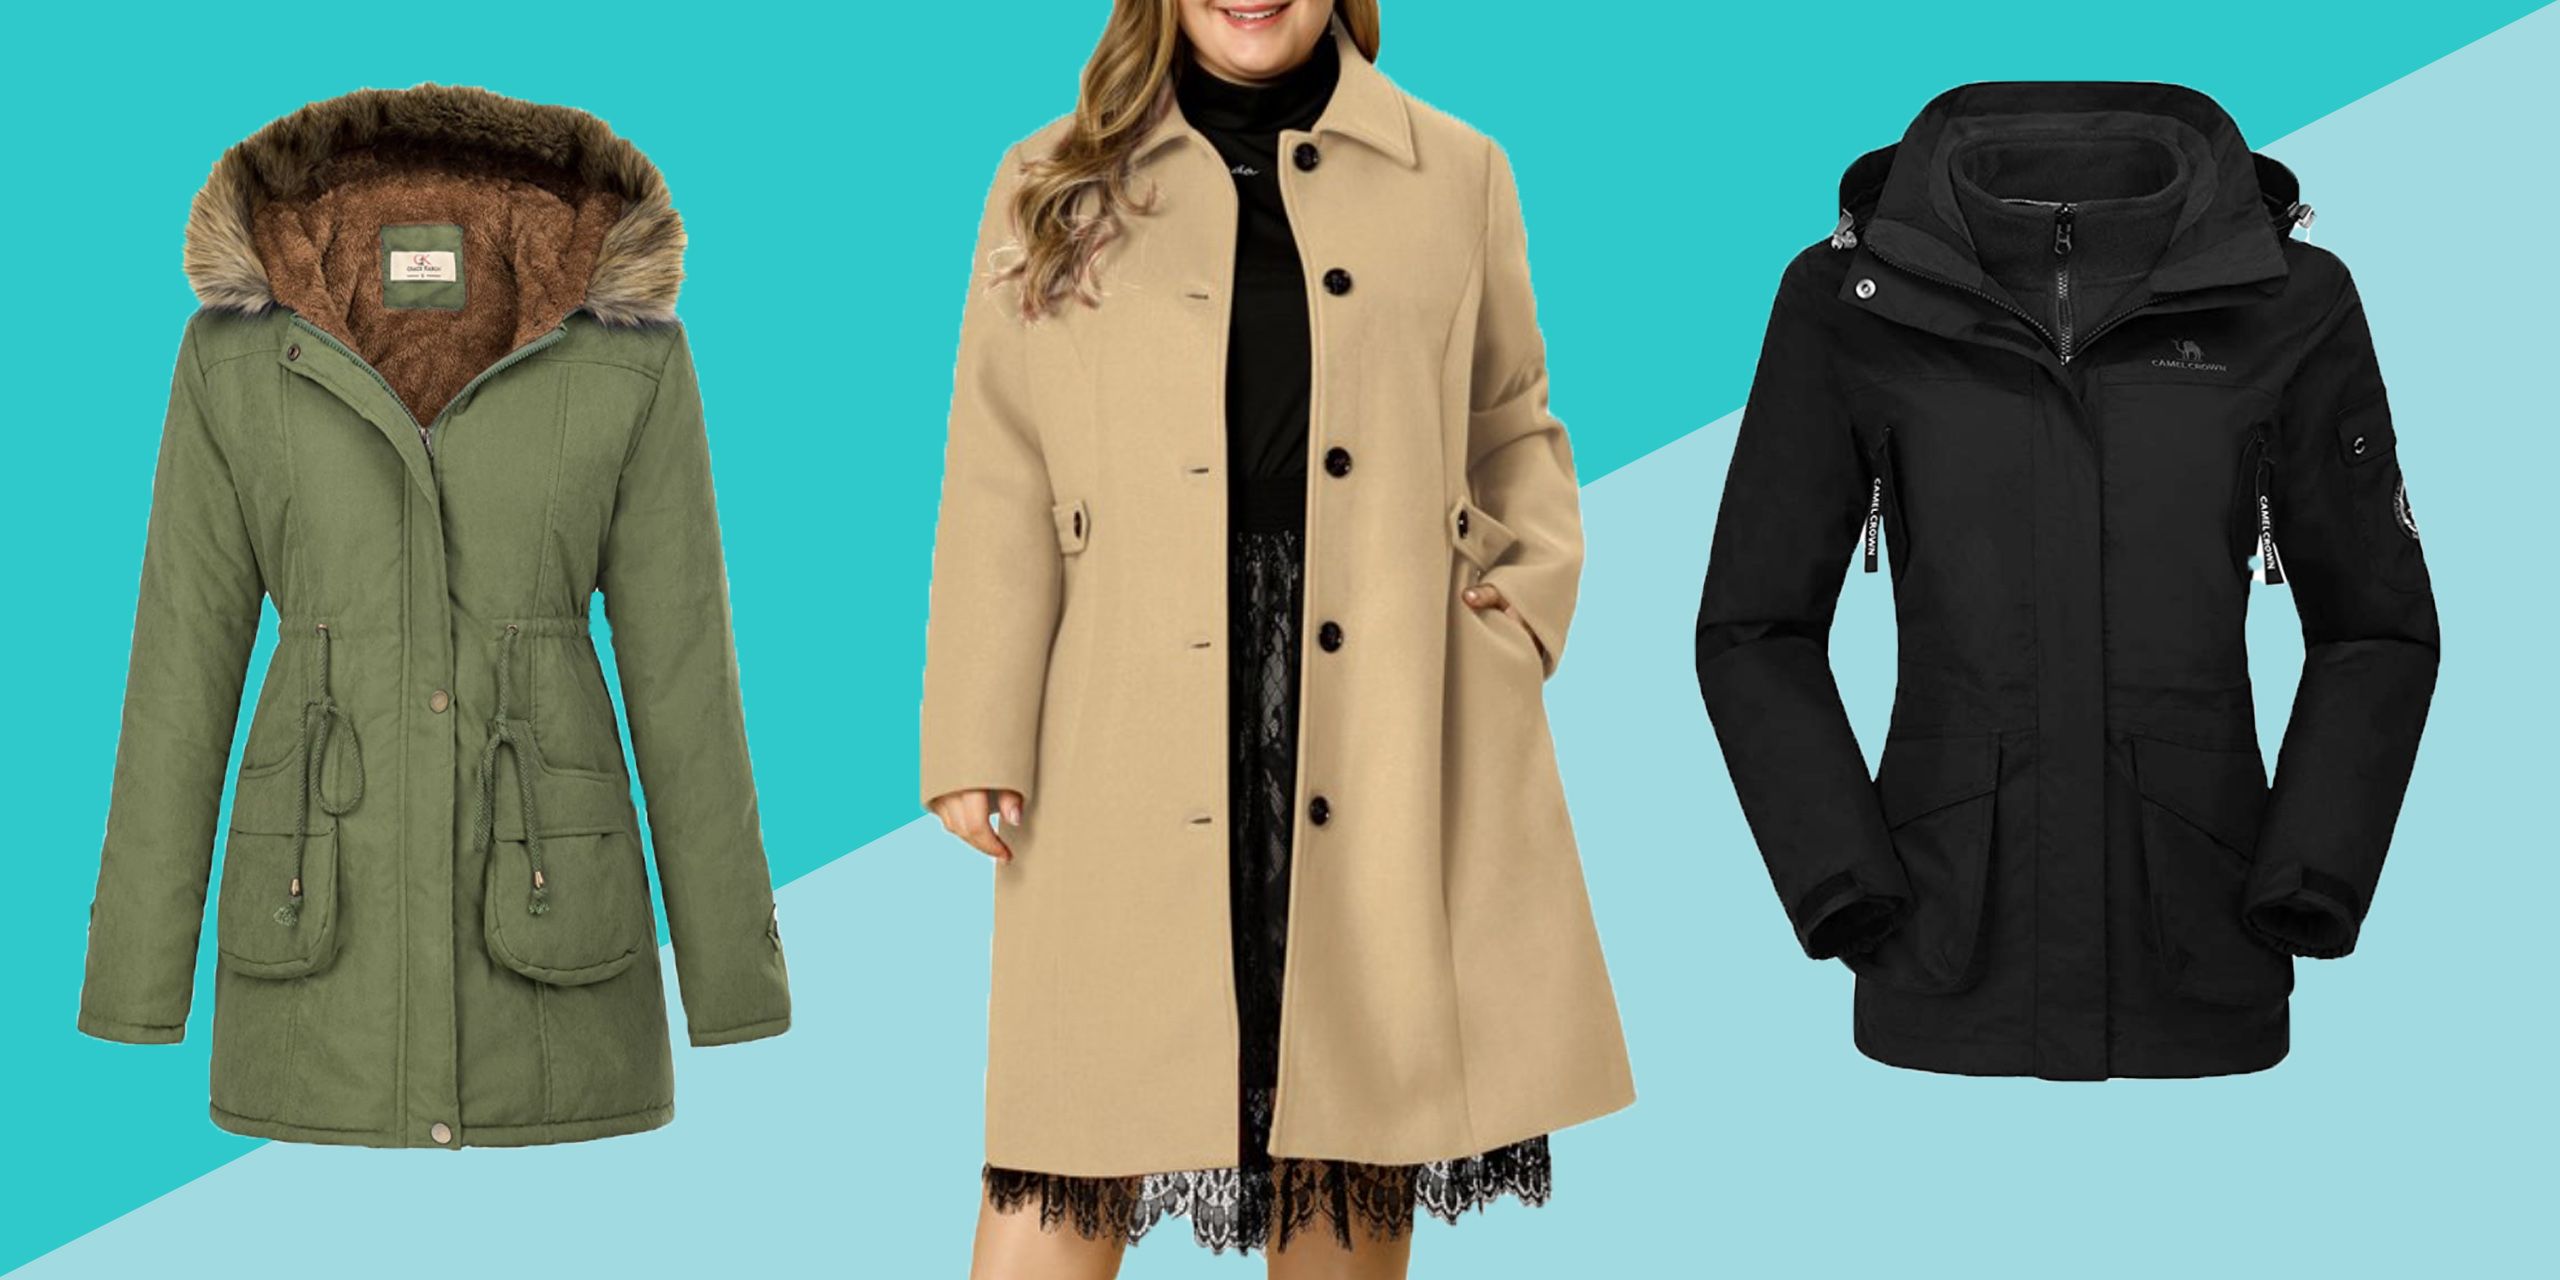 Wool Swing Coat Women, Winter Coat Plus Size, White Coat With